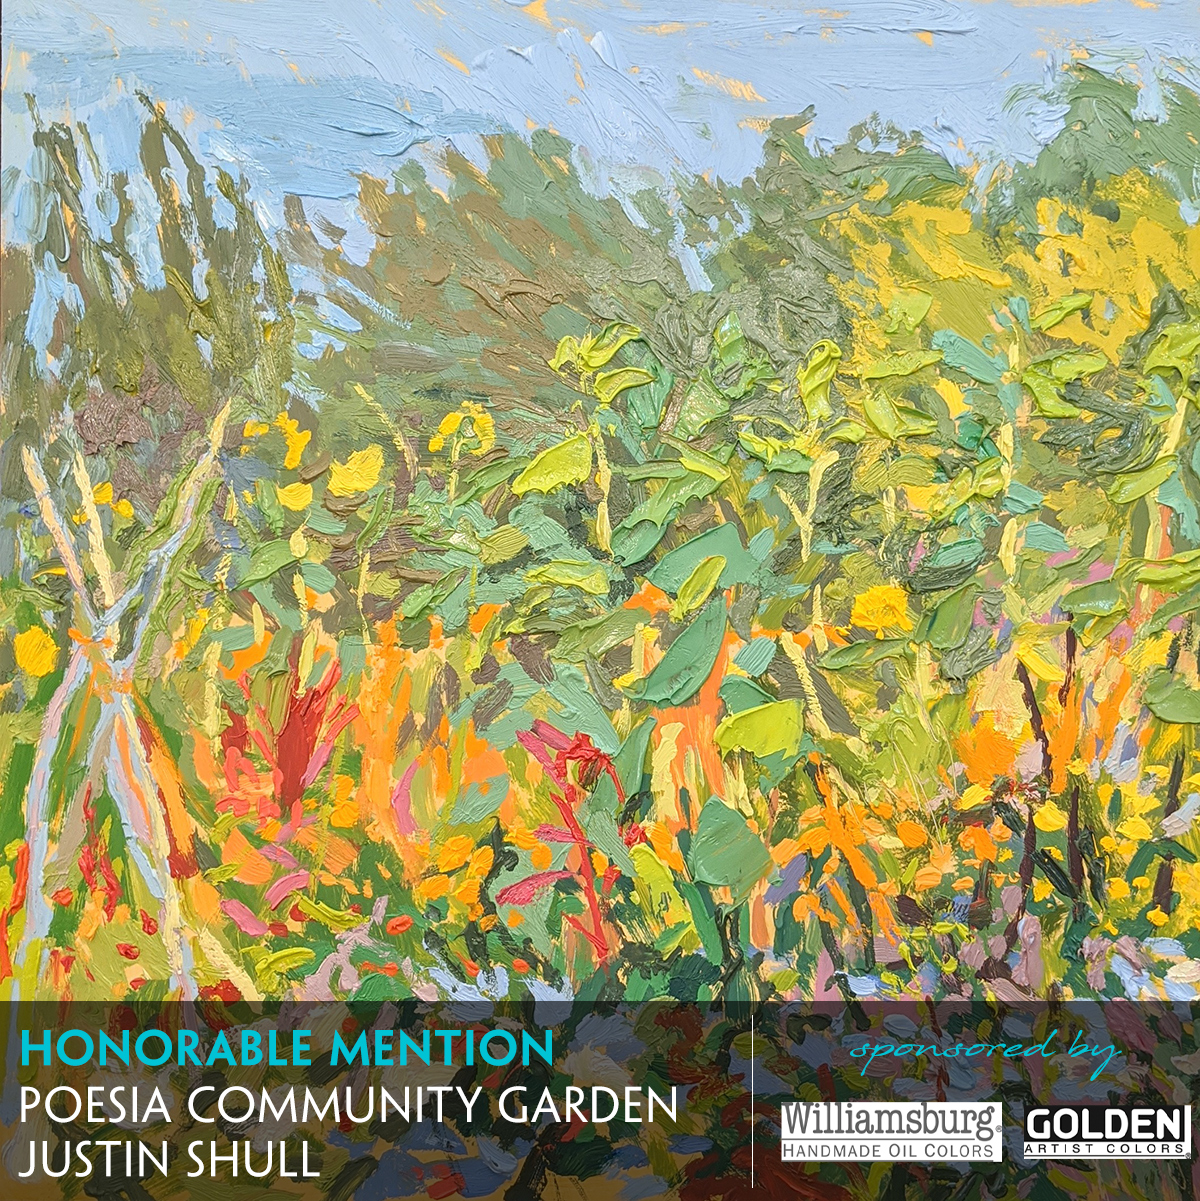 Poesia Community Garden by Justin Shull